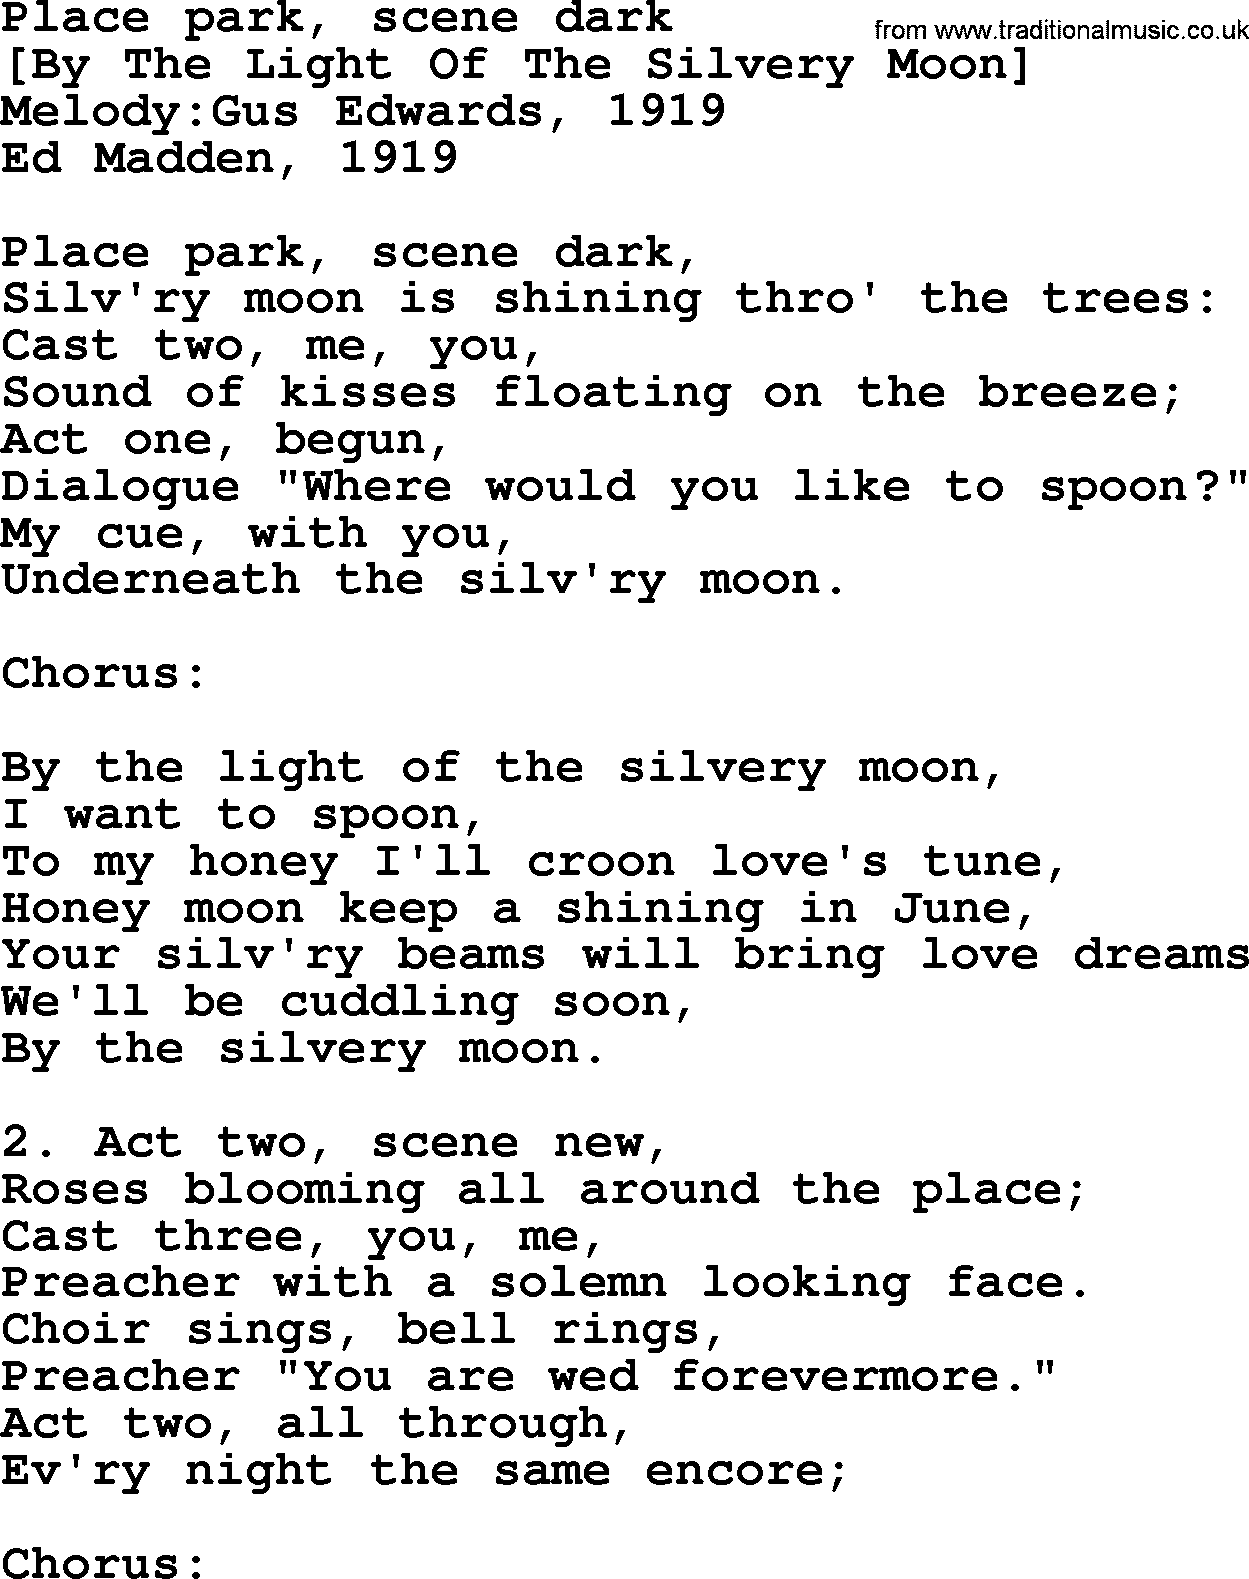 Old American Song: Place Park, Scene Dark, lyrics